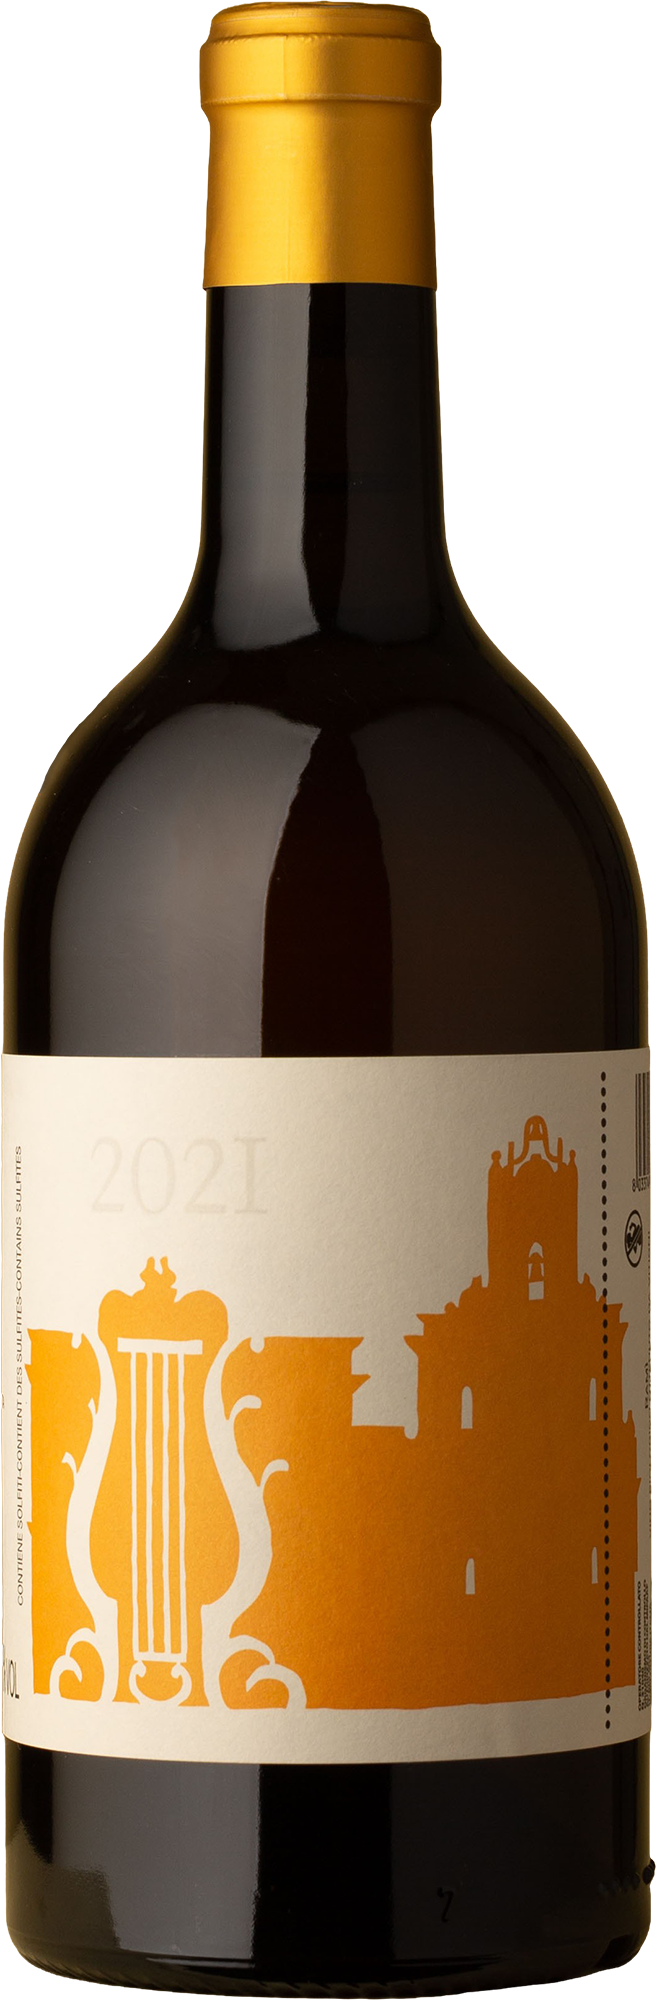 COS - Rami Izolia / Grecanico 2021 Orange Wine